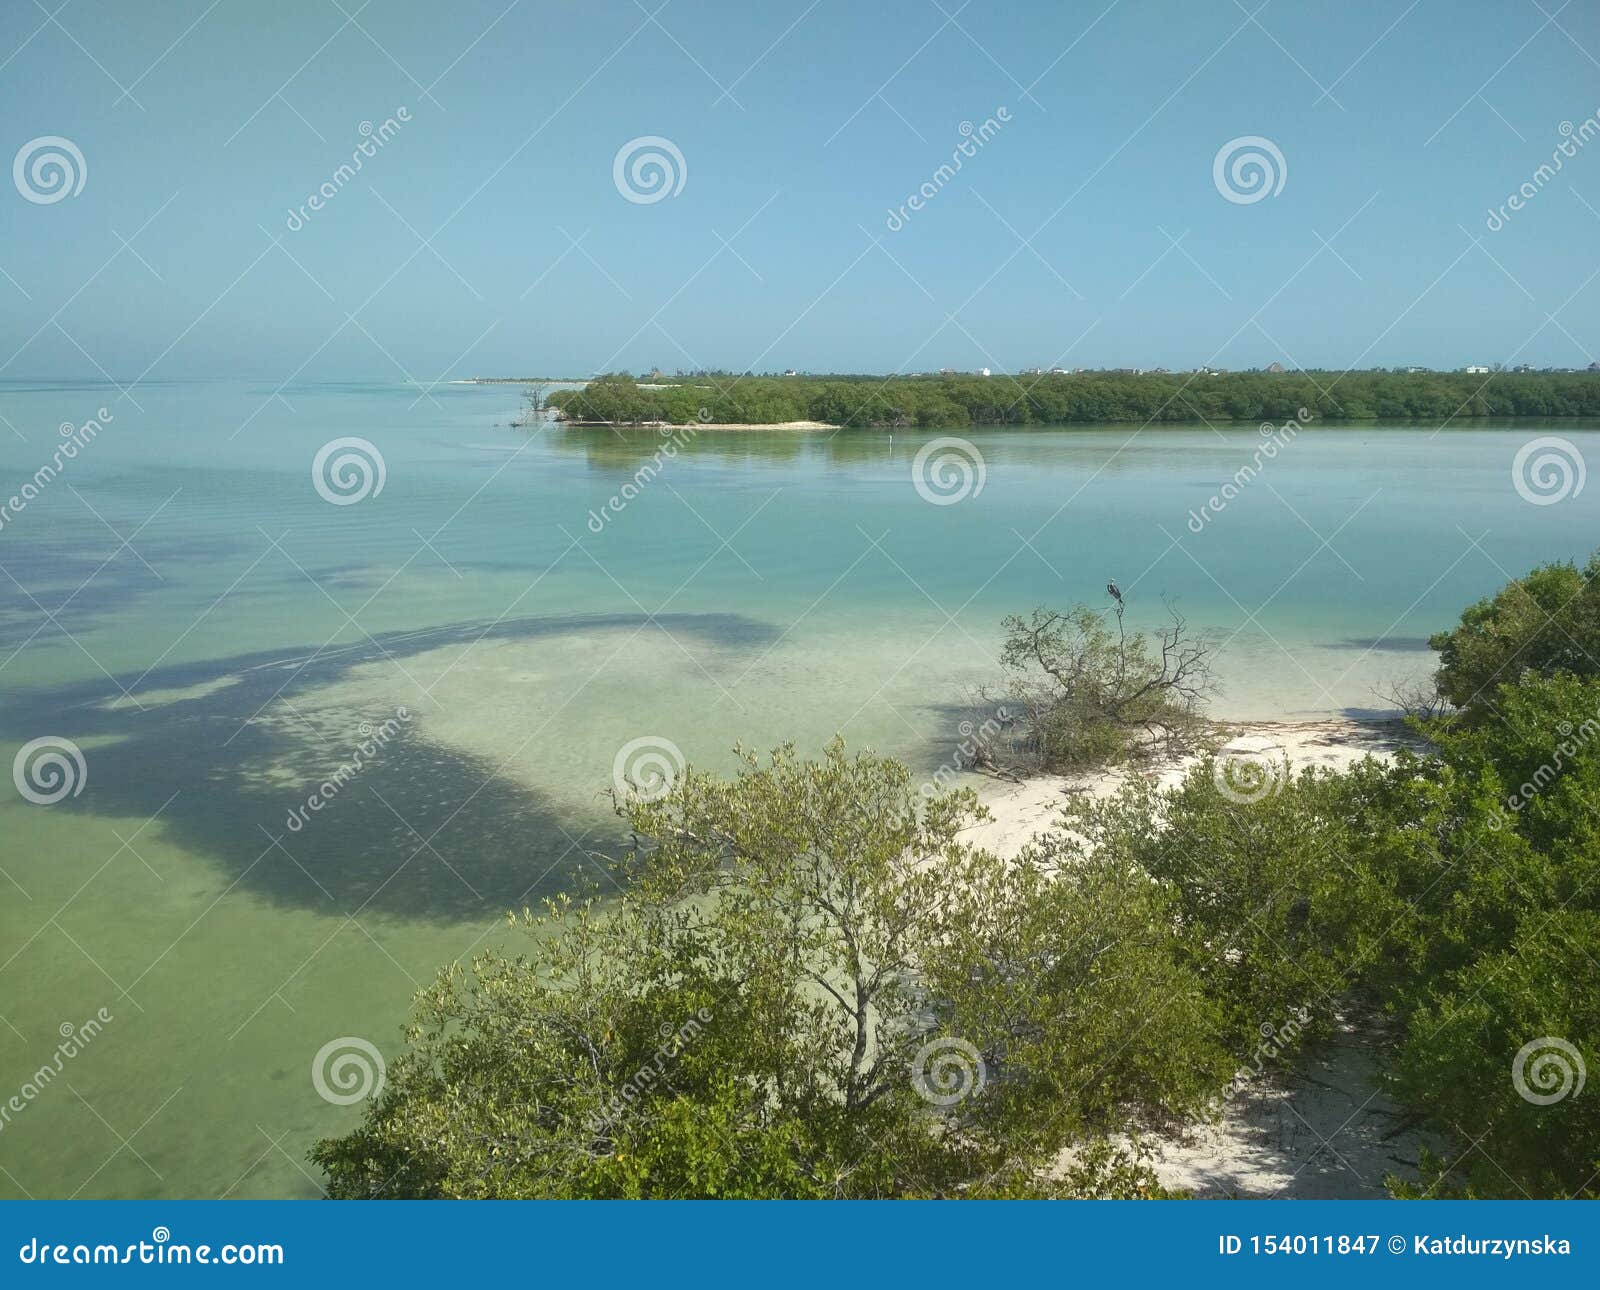 isla pasion - yum balam protected area